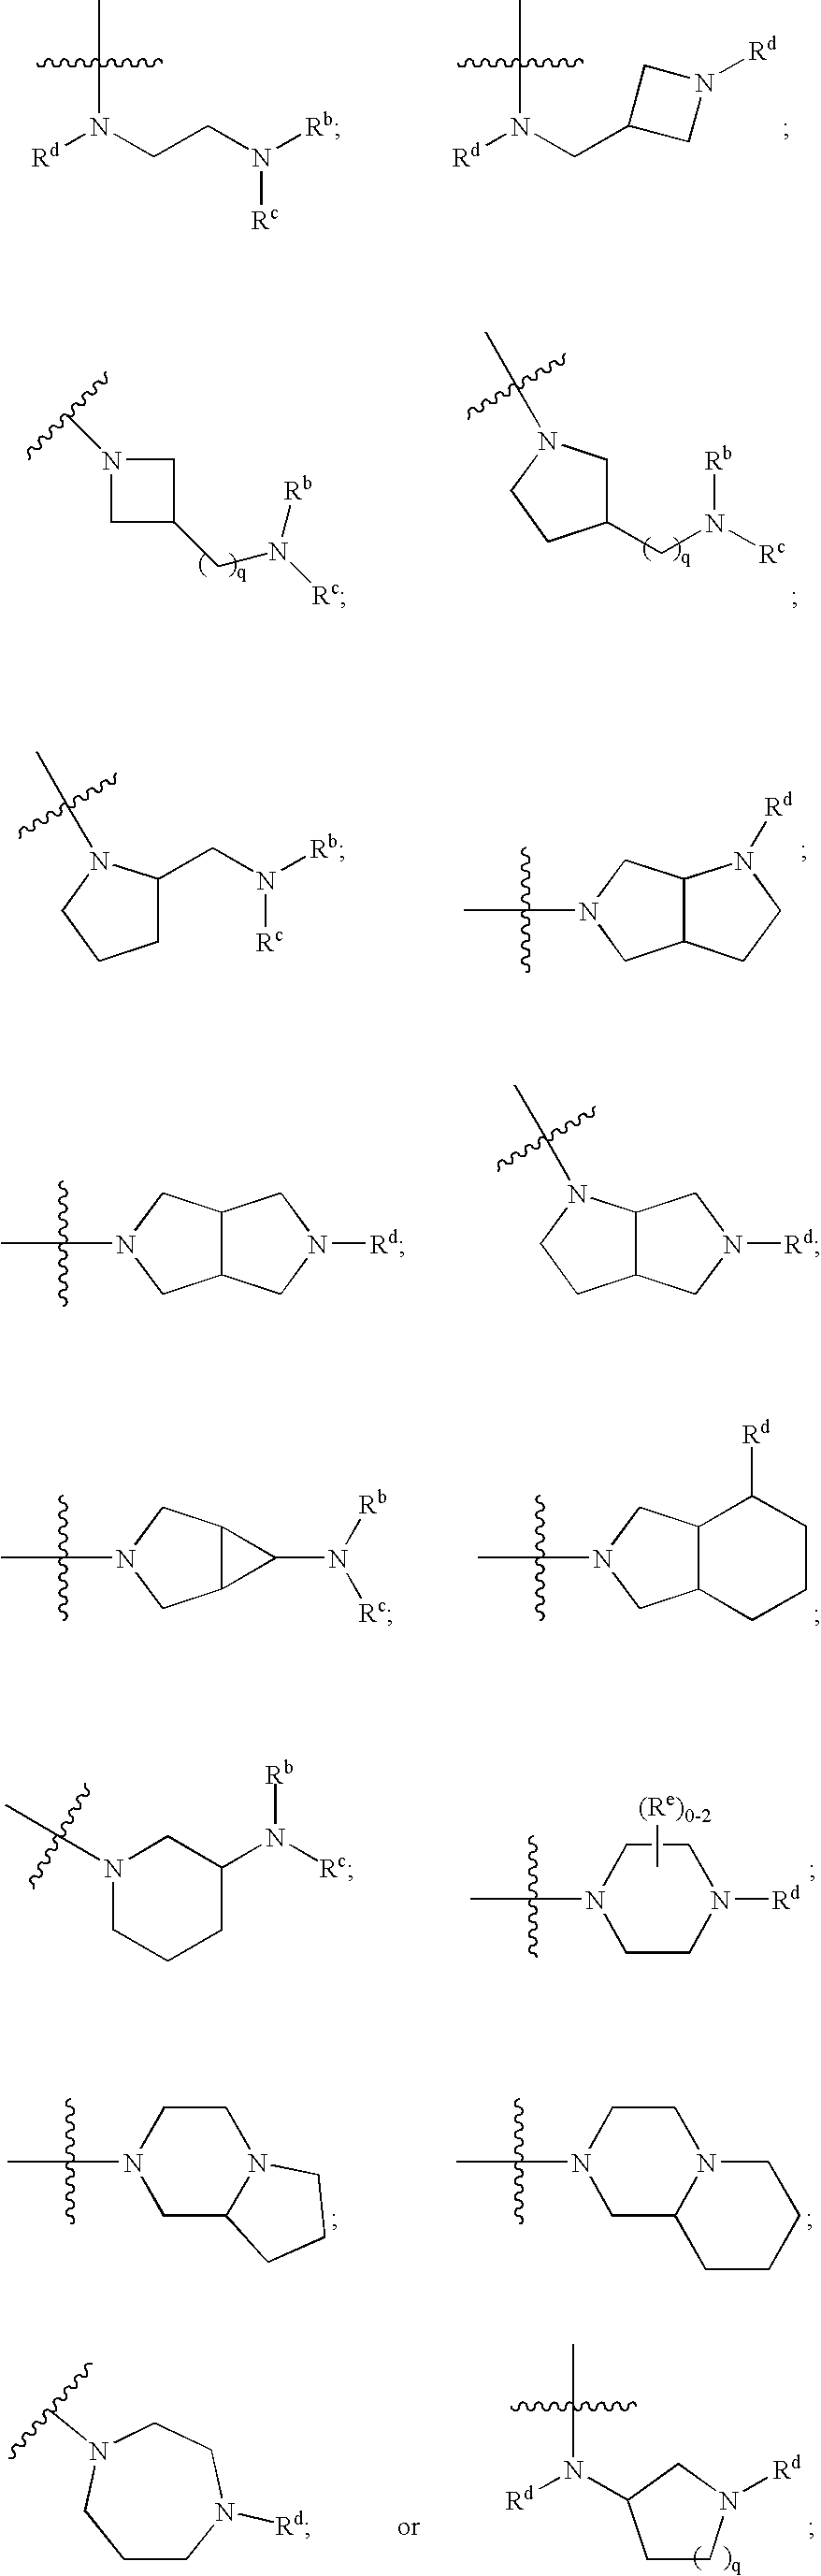 Benzofuro- and benzothienopyrimidine modulators of the histamine H4 receptor